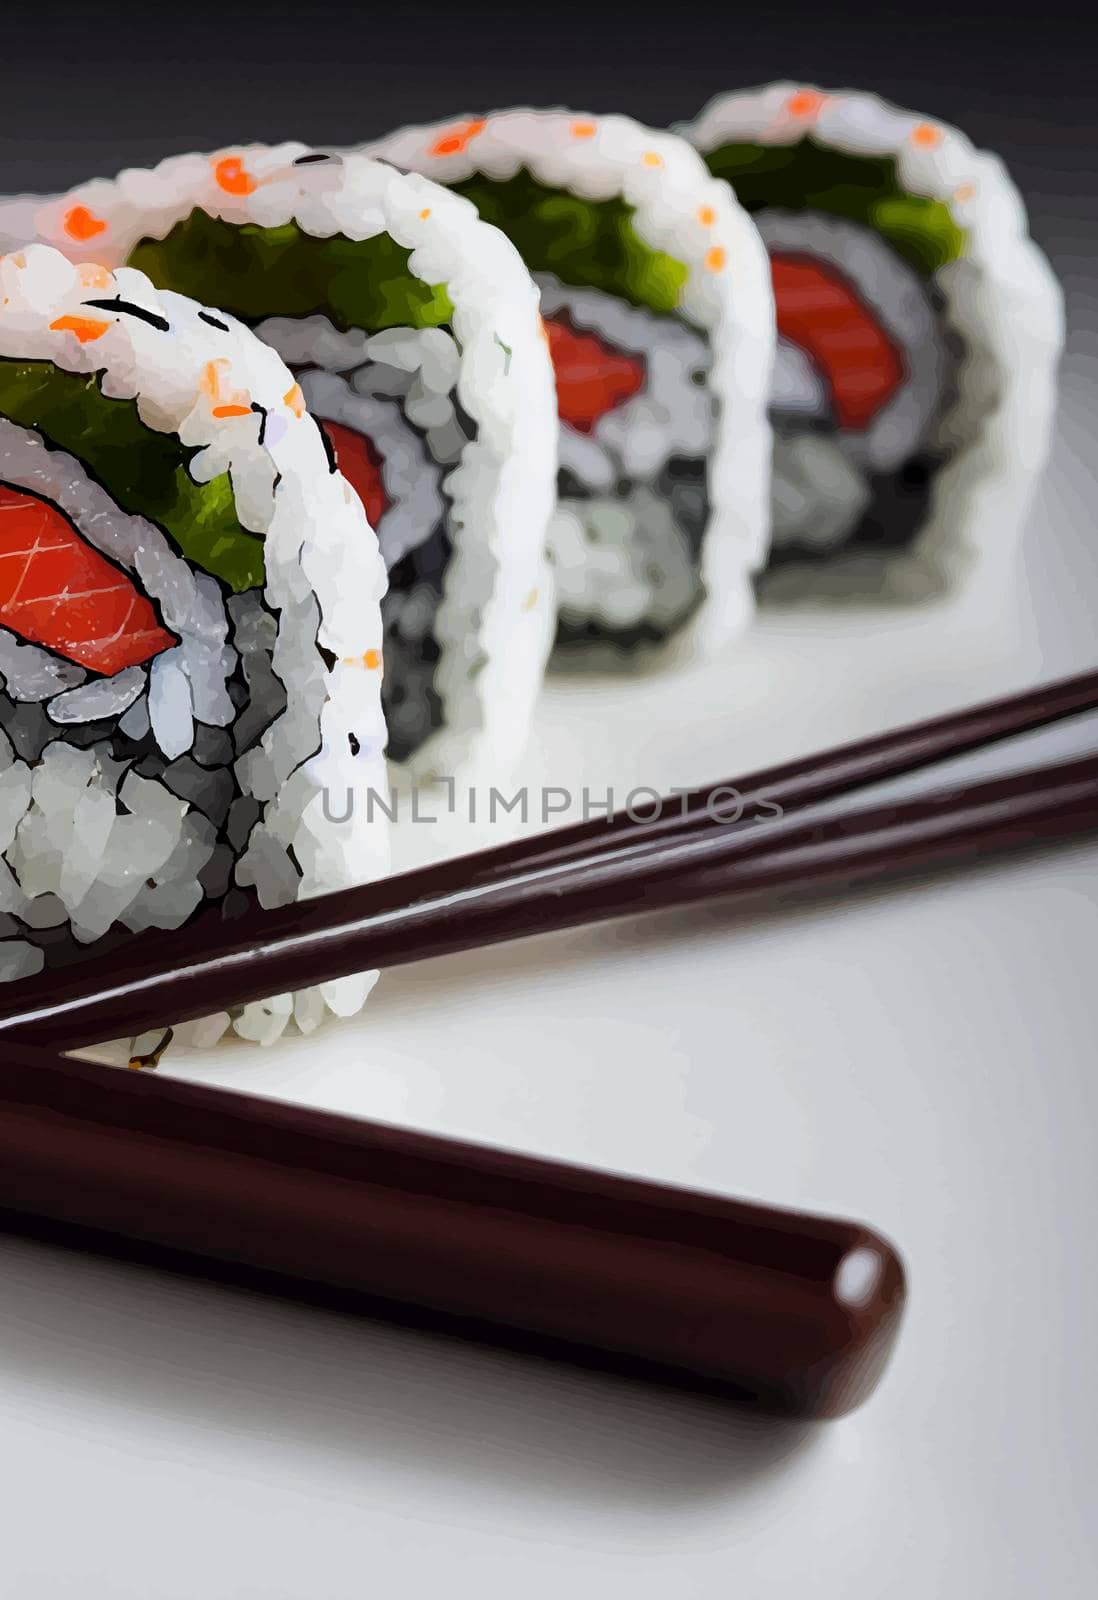 illustration of delicious sushi rolls by JpRamos